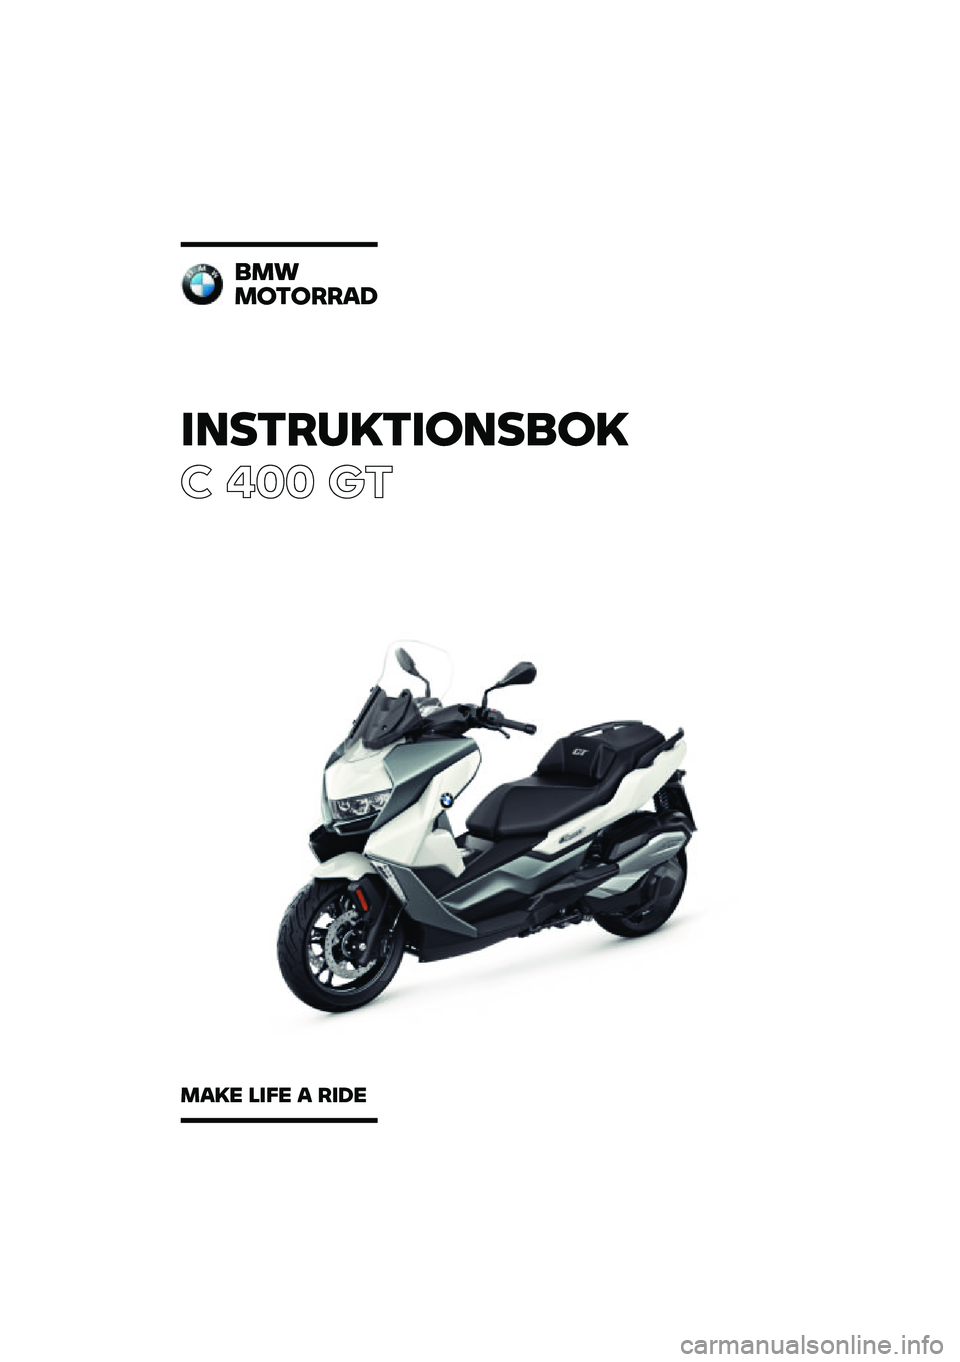 BMW MOTORRAD C 400 GT 2020  Instruktionsbok (in Swedish) �������\b���	���
�	�\b
� ��� ��\b
�
��\f
��	��	���
�
��
�\b� ���� �
 ���� 